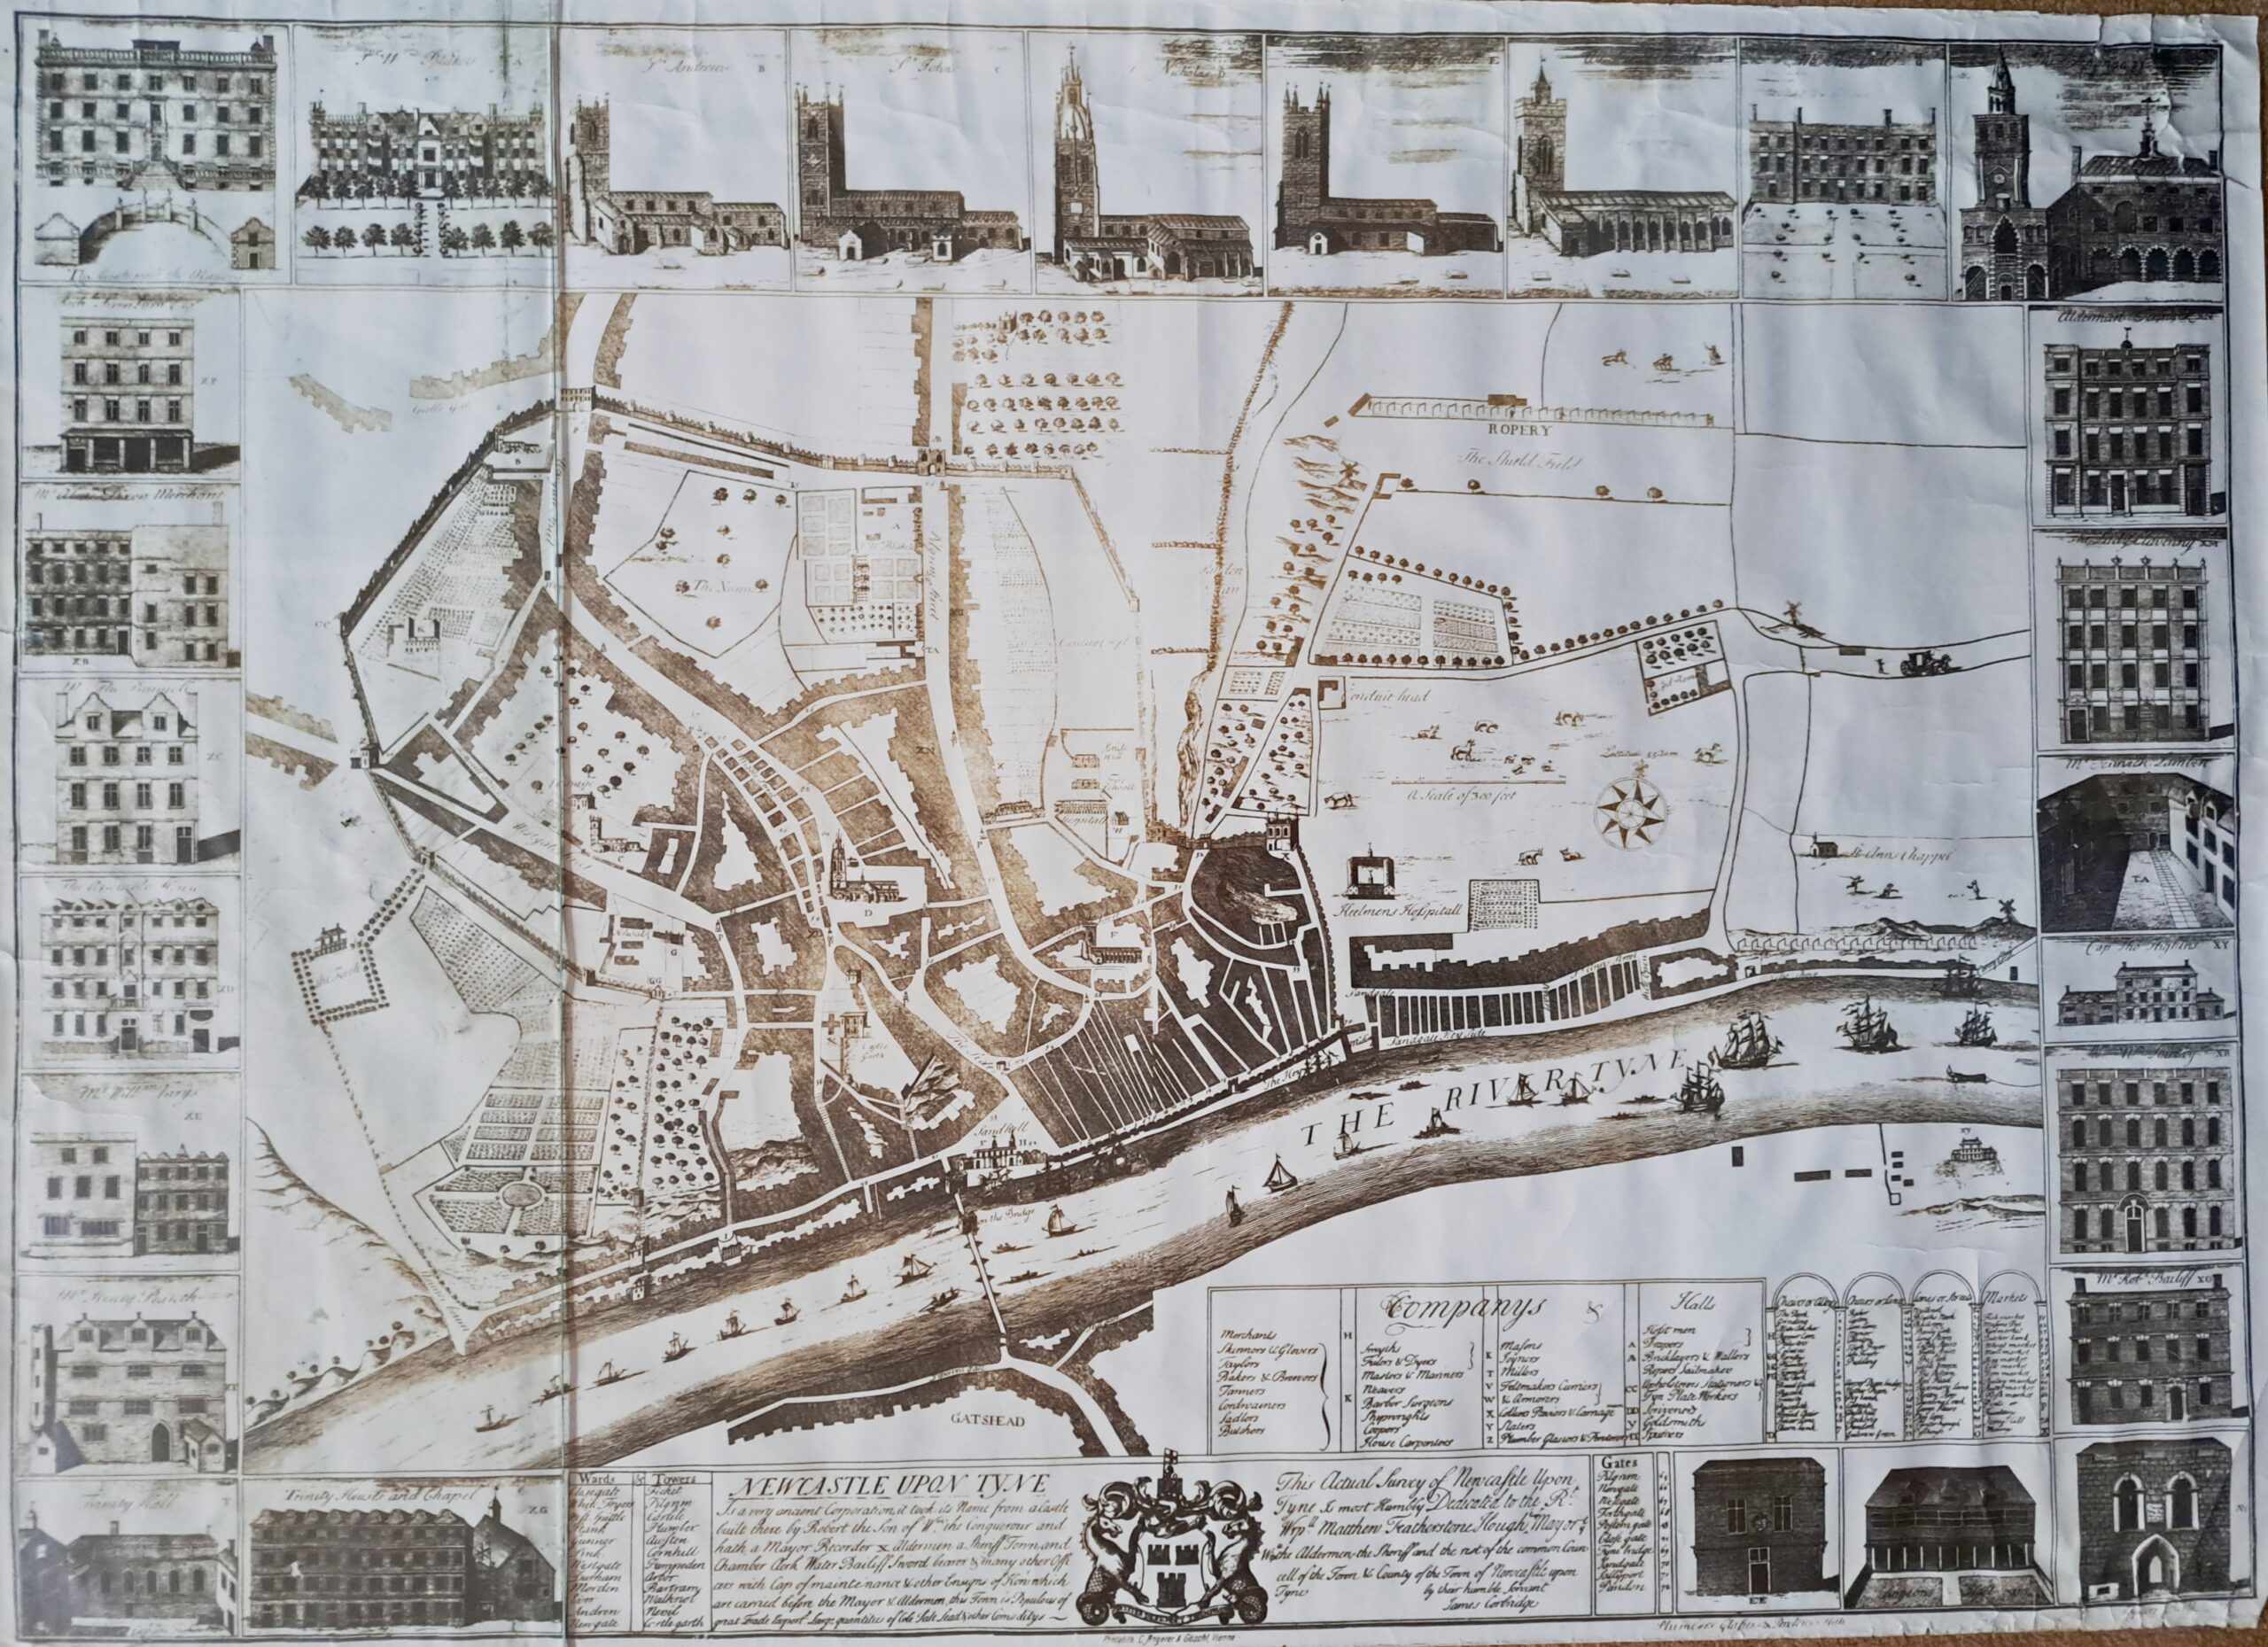 10 - Survey of Newcastle by James Corbridge - 1723